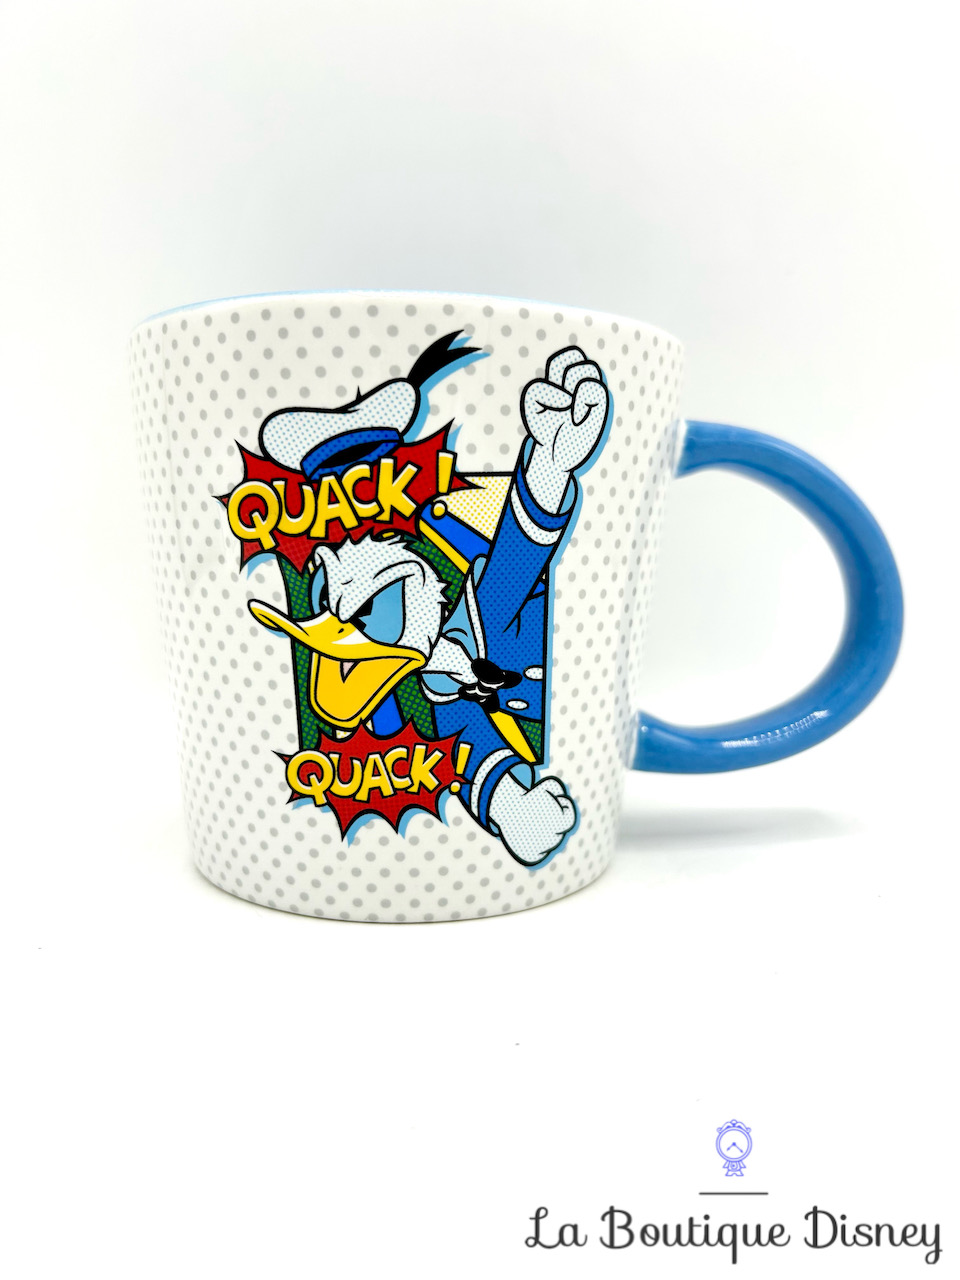 Tasse Donald Duck Quack Disney Store 2018 mug BD rétro vintage